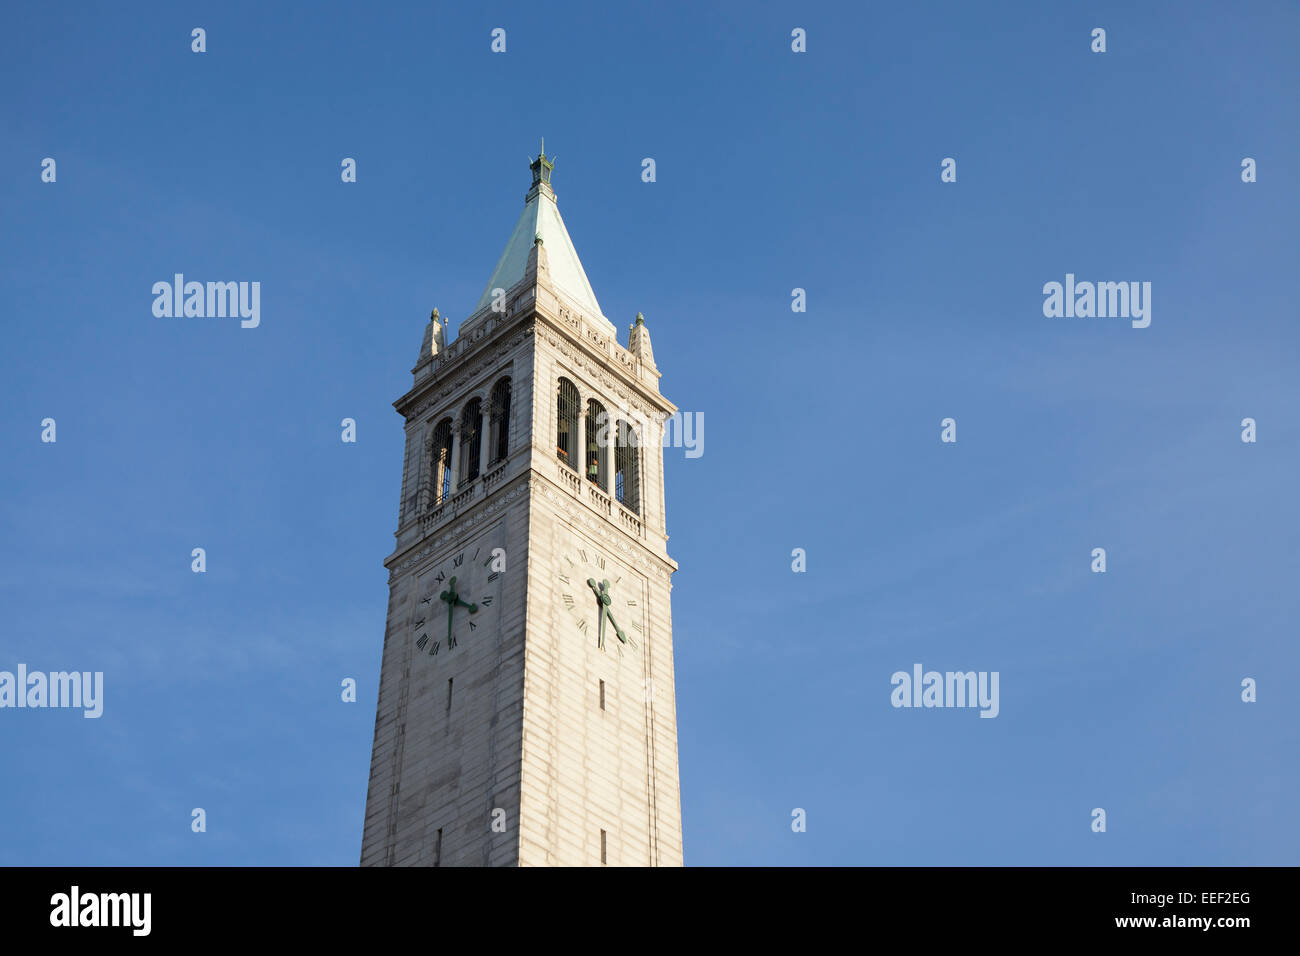 The Campanile (Sather Tower) at the University of California Berkeley - Alameda County, California, USA Stock Photo